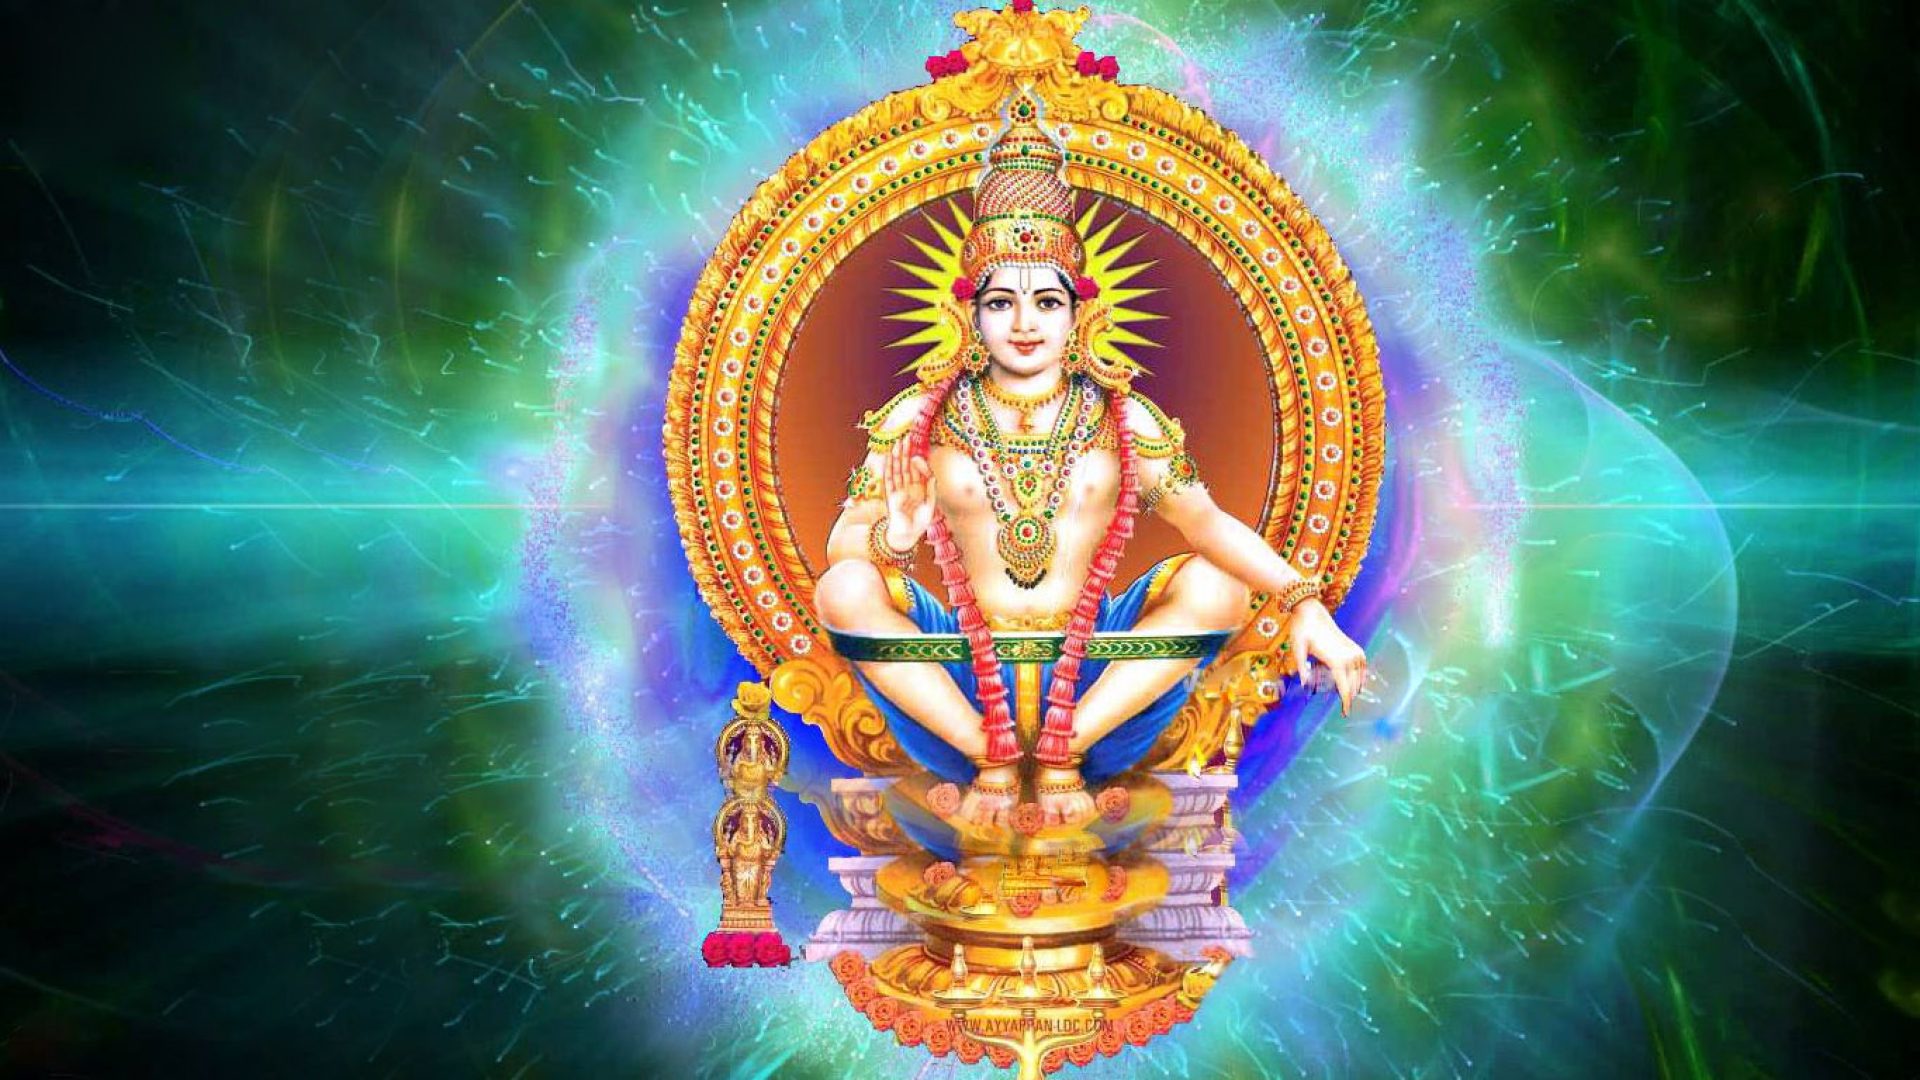 Ayyappa Images For Mobile | Hindu Gods and Goddesses